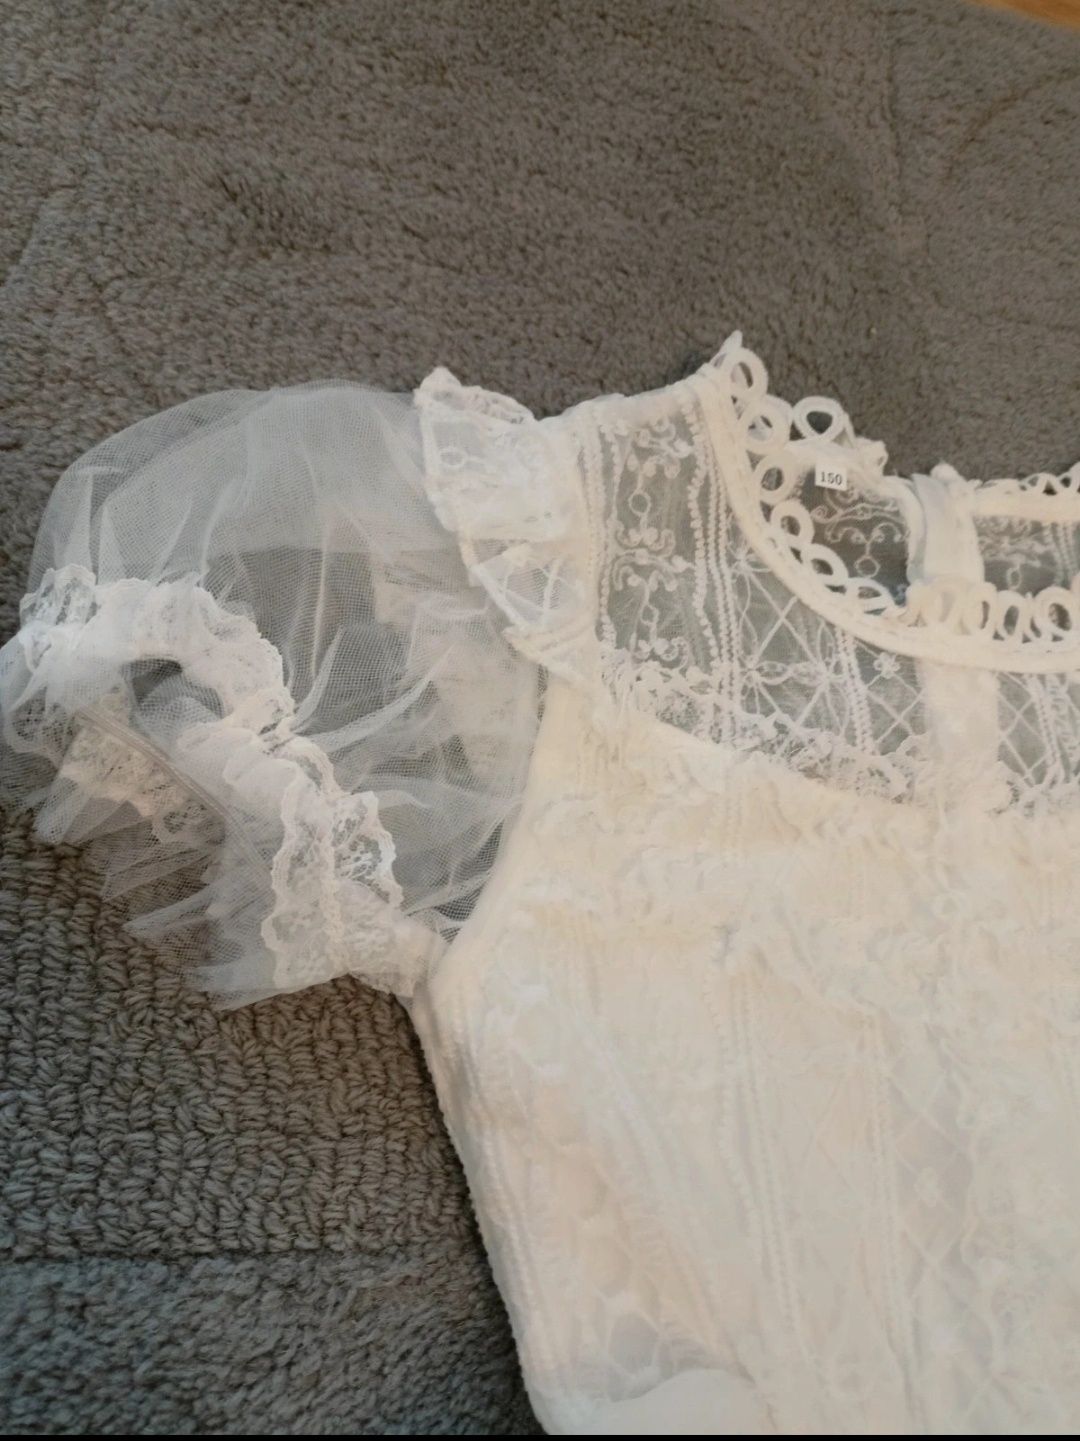 Nowa sukienka 134  tiulowa elegancka wesele Komunia